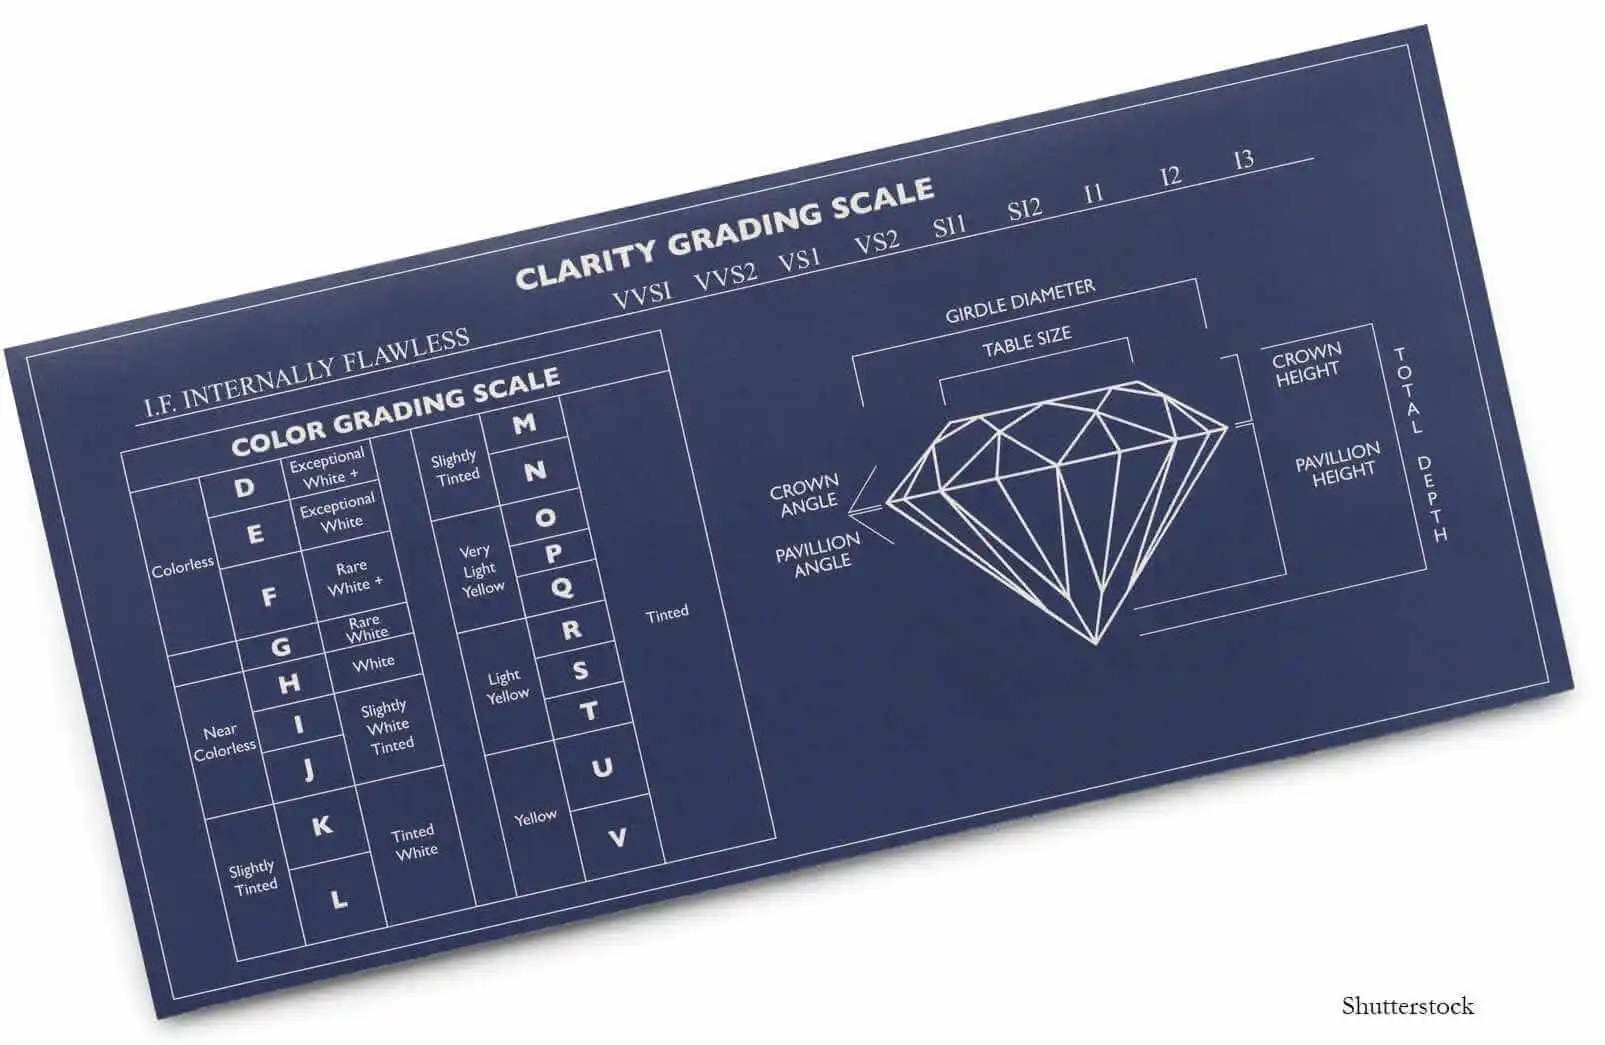 Diamond Cut Chart